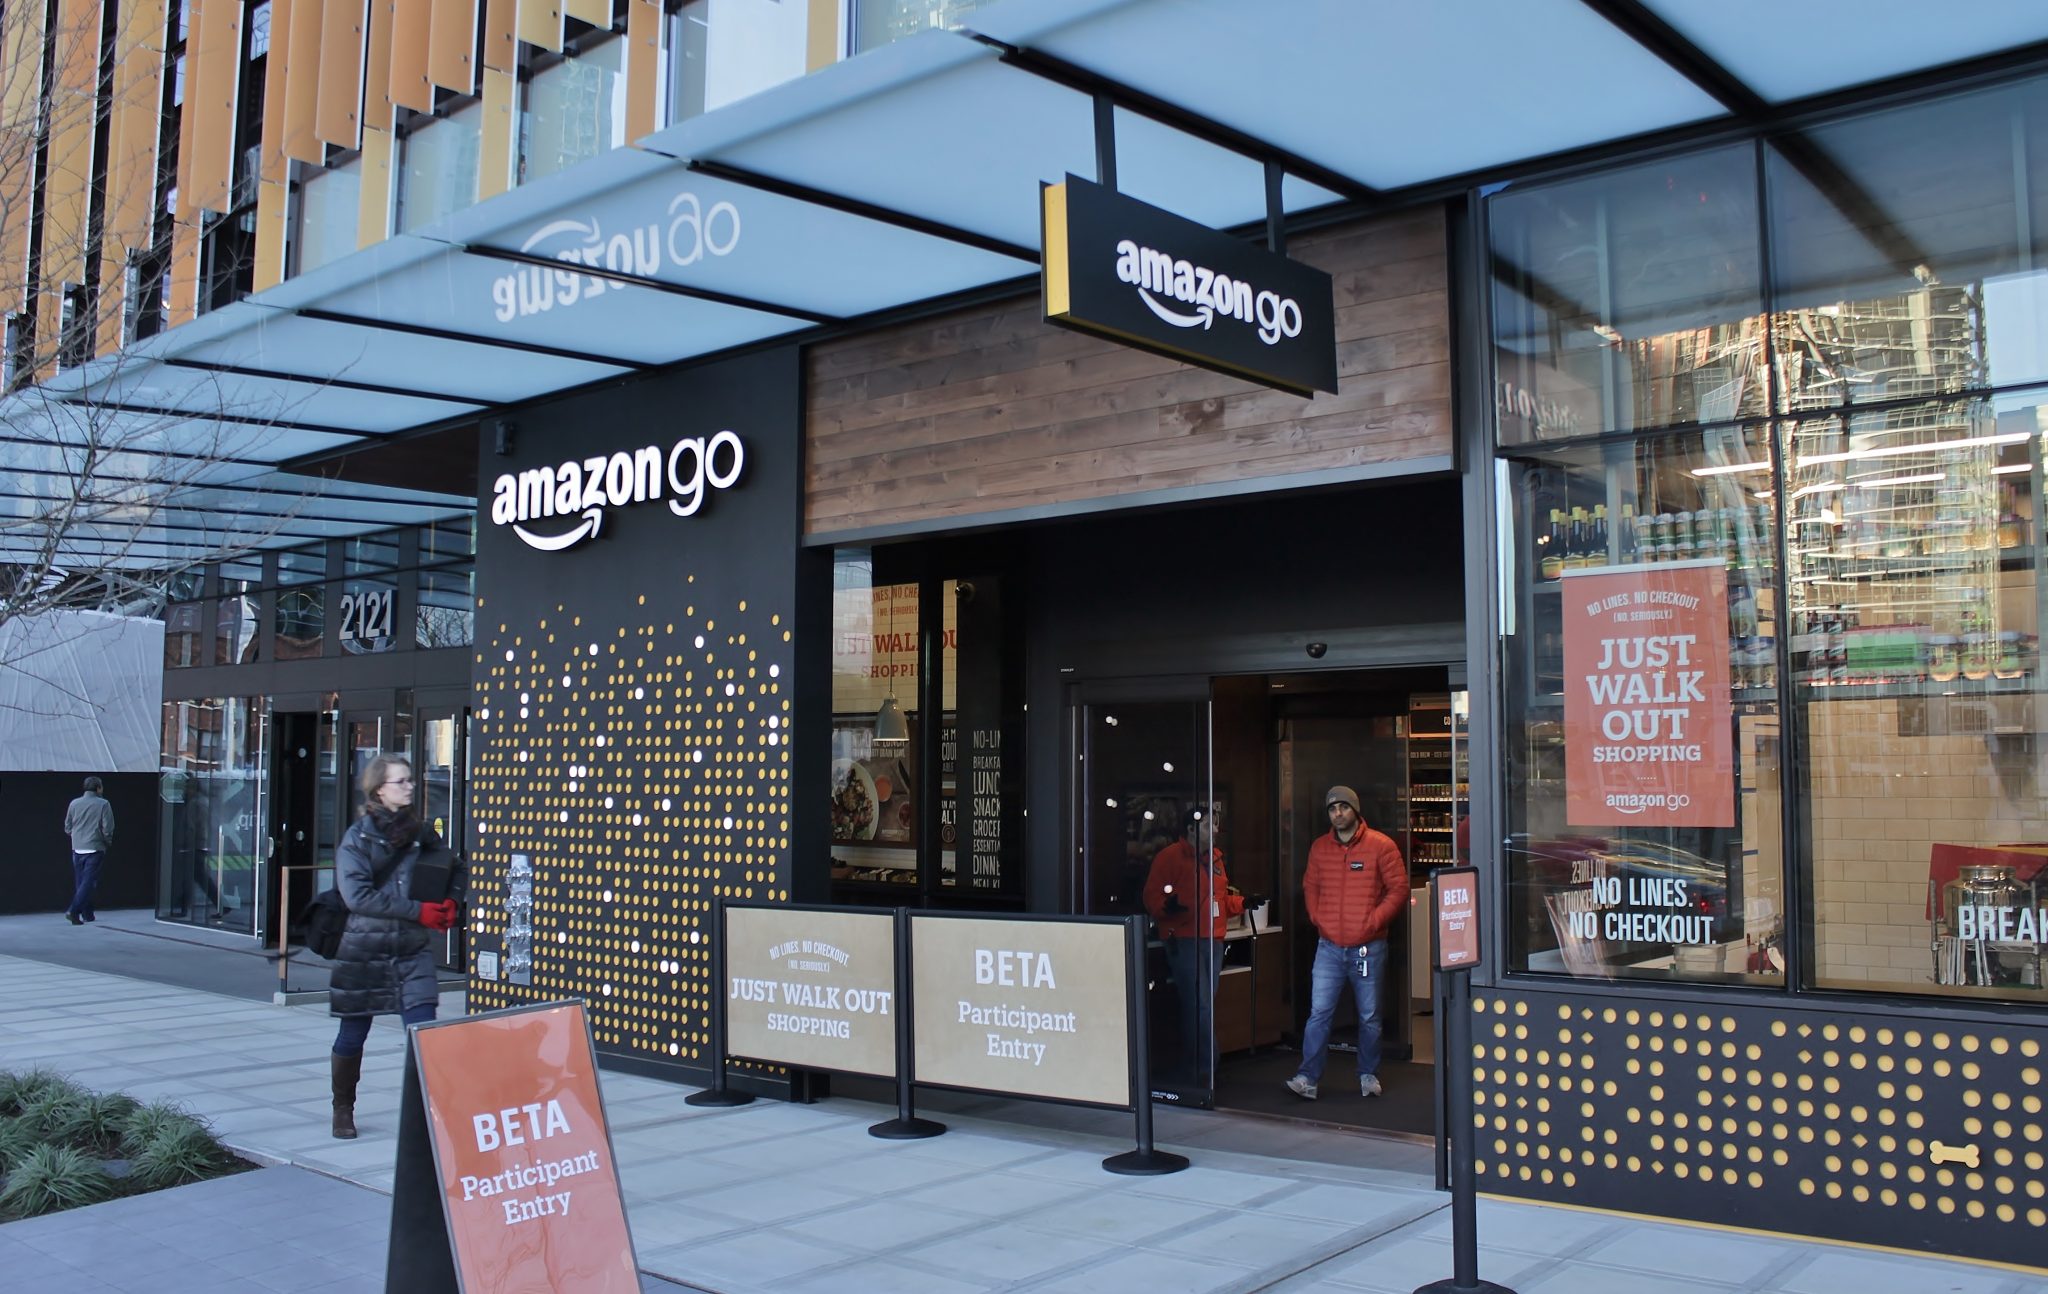 Amazon Go store in Seattle